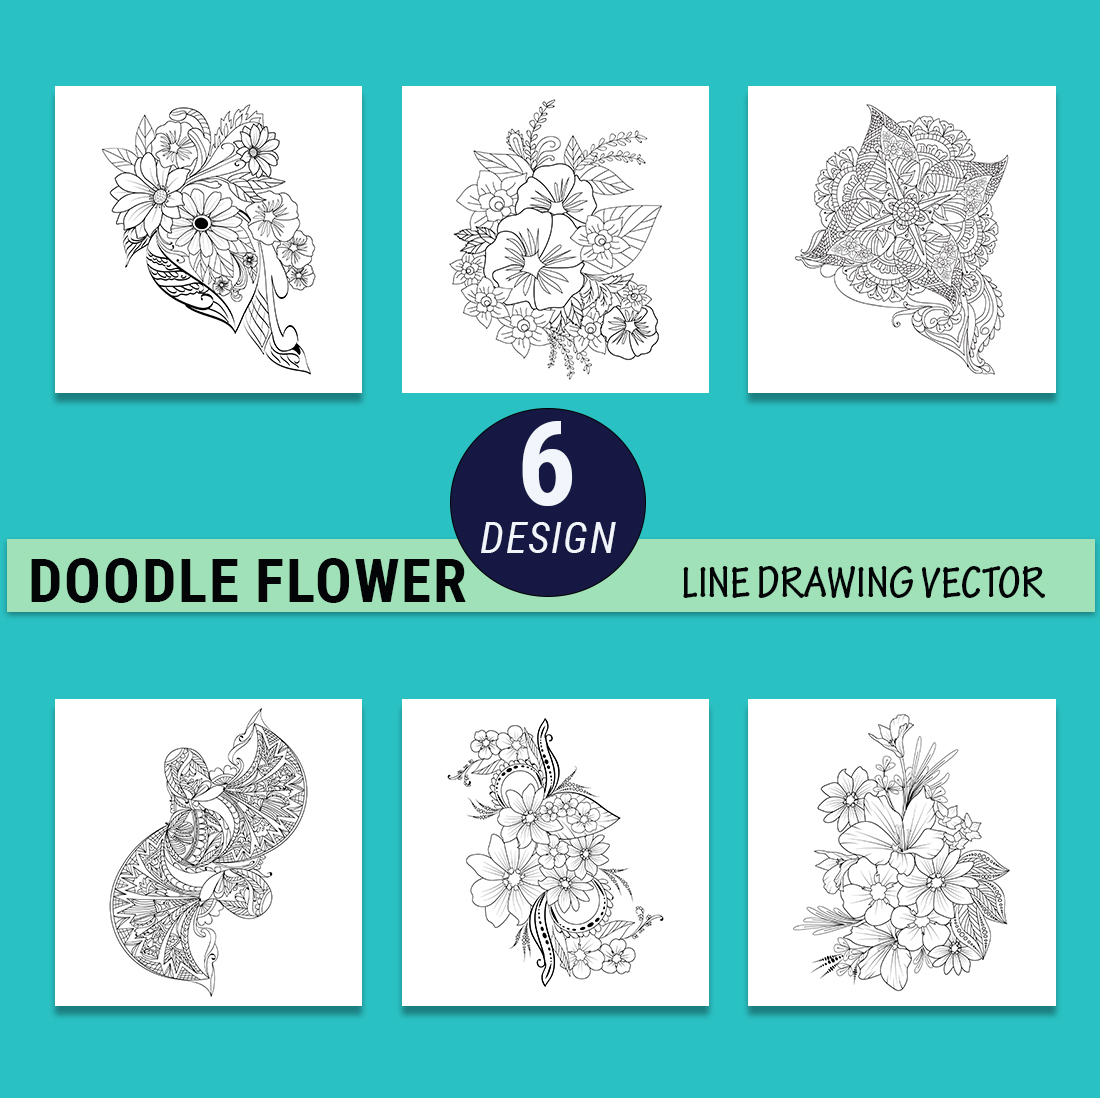 Doodle flower art, doodle flower art drawing, doodle flower drawing, flower drawing doodle art zentangle art preview image.